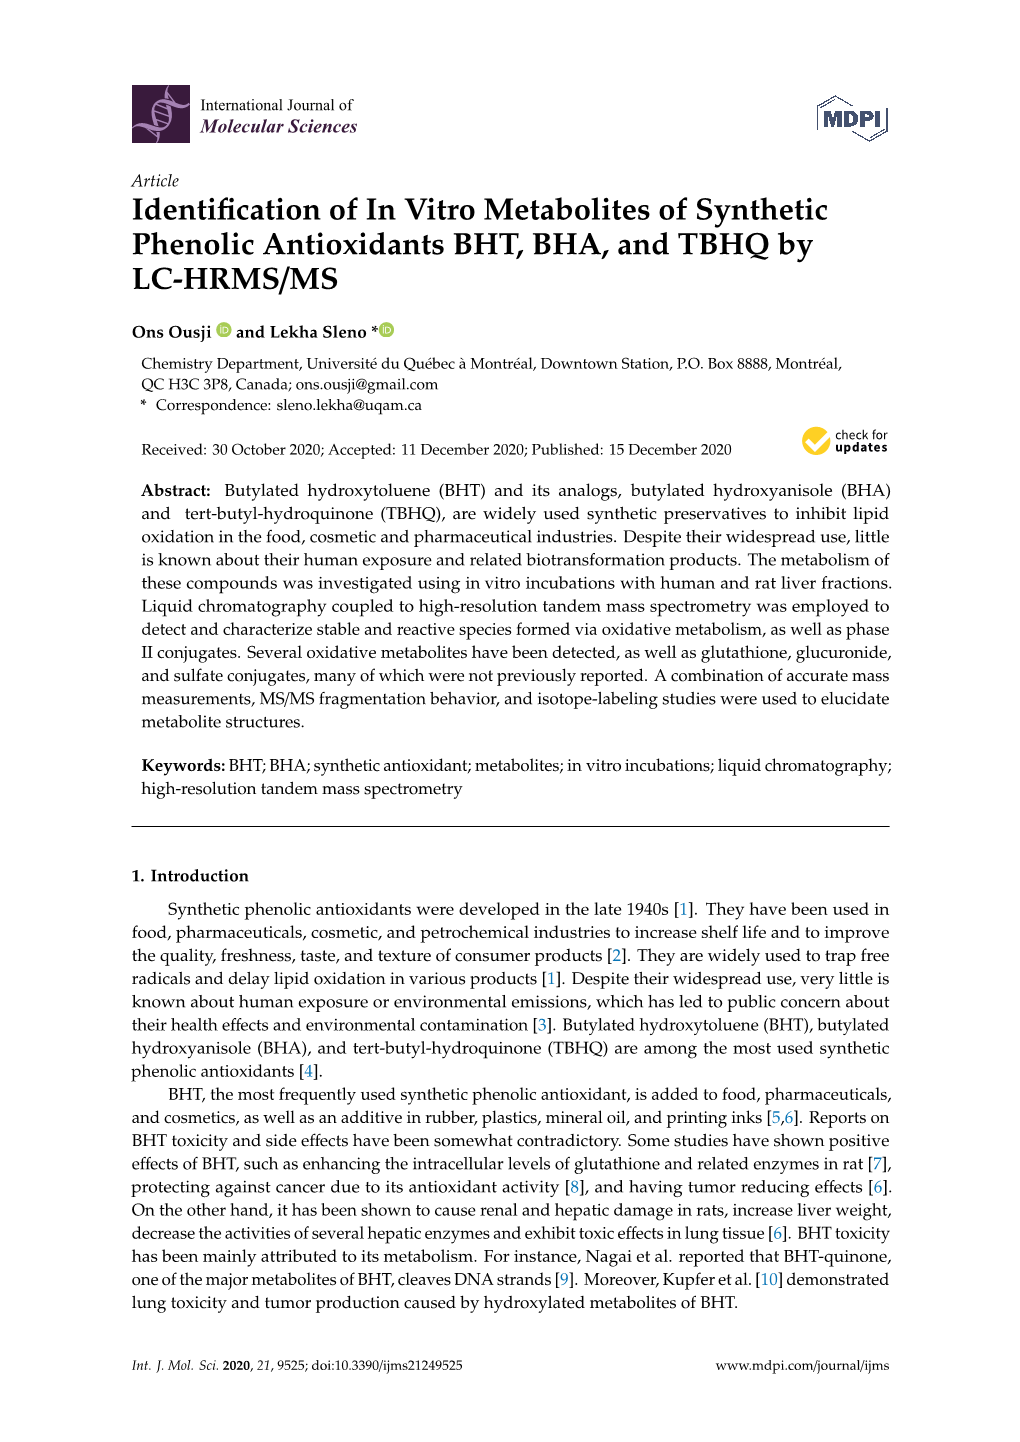 Identification of in Vitro Metabolites of Synthetic Phenolic Antioxidants